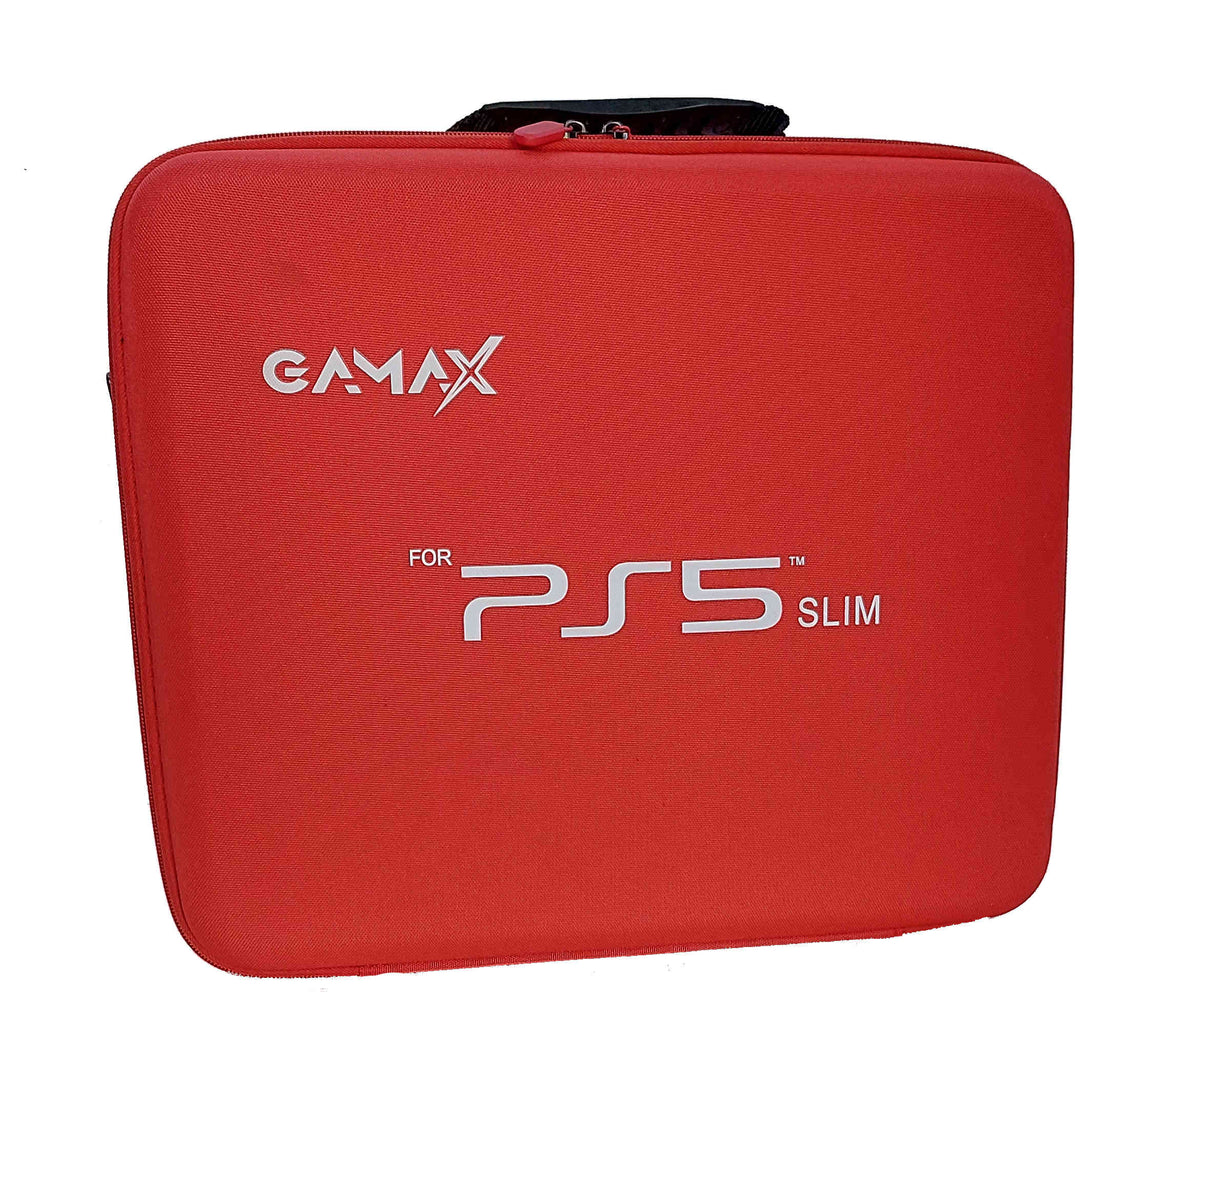 Gamax Storage Bag For Playstation 5 Slim - Red